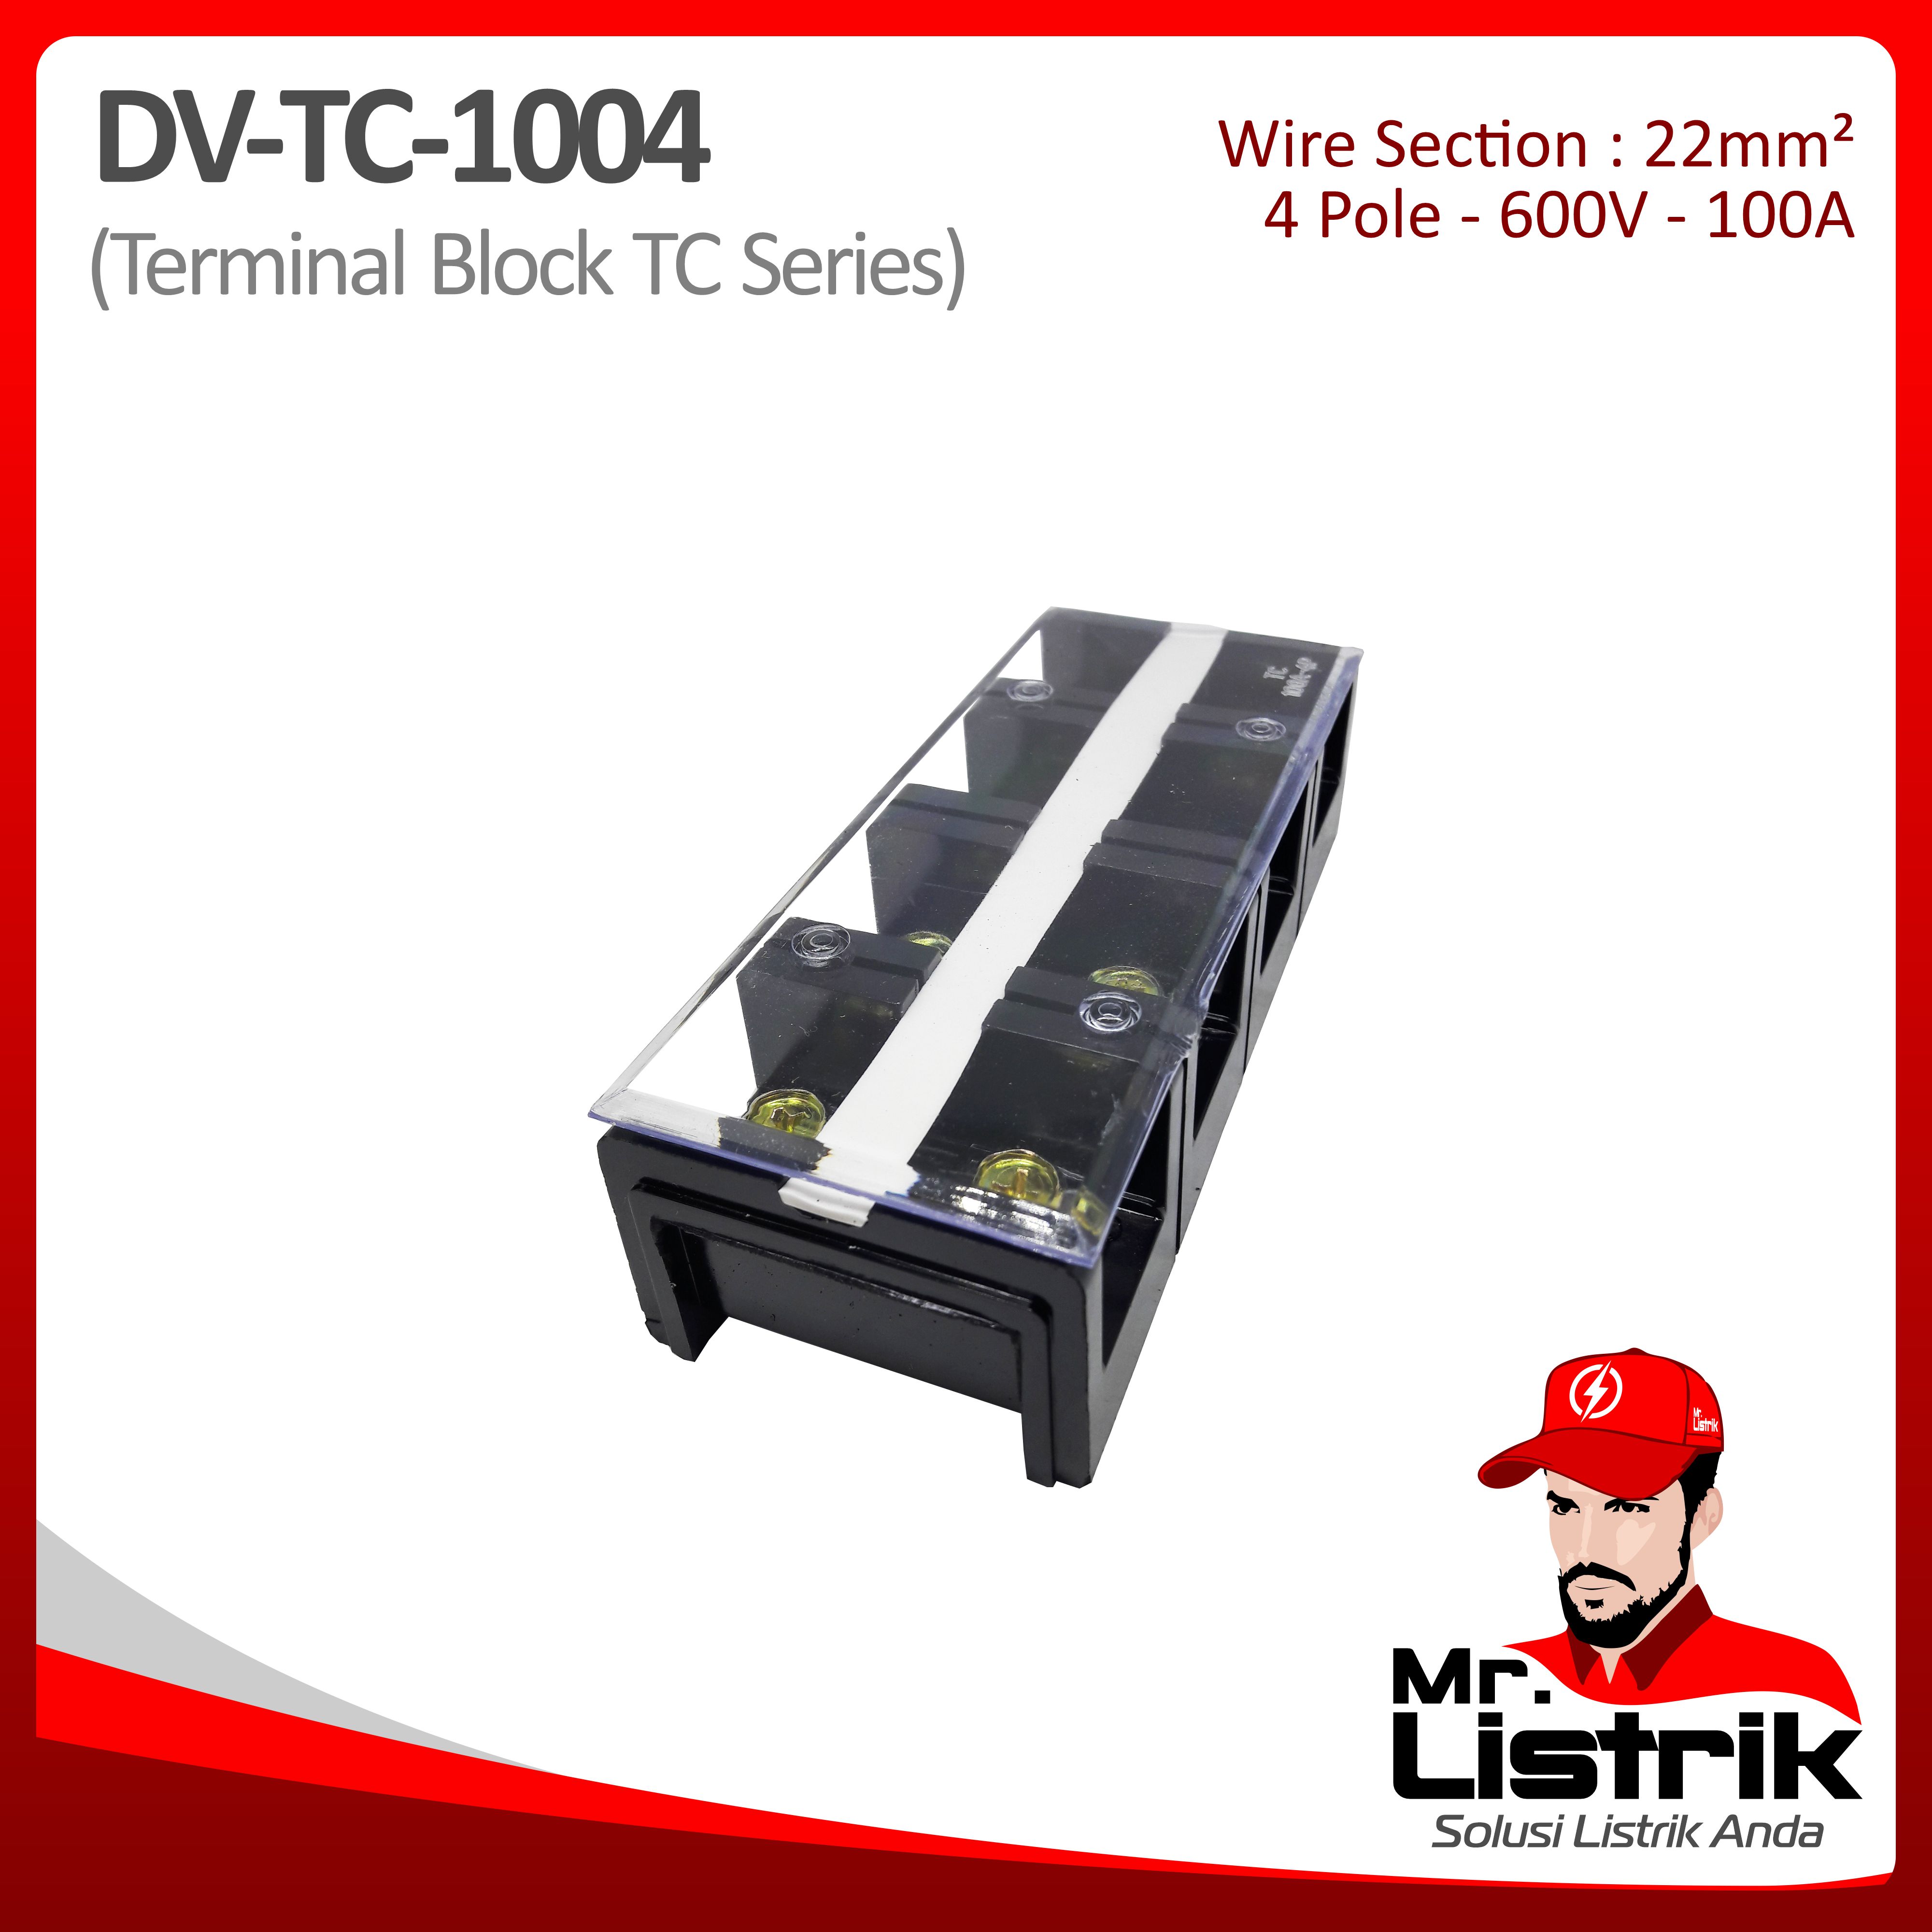 Terminal Block TC Series 4P 100A DV TC-1004